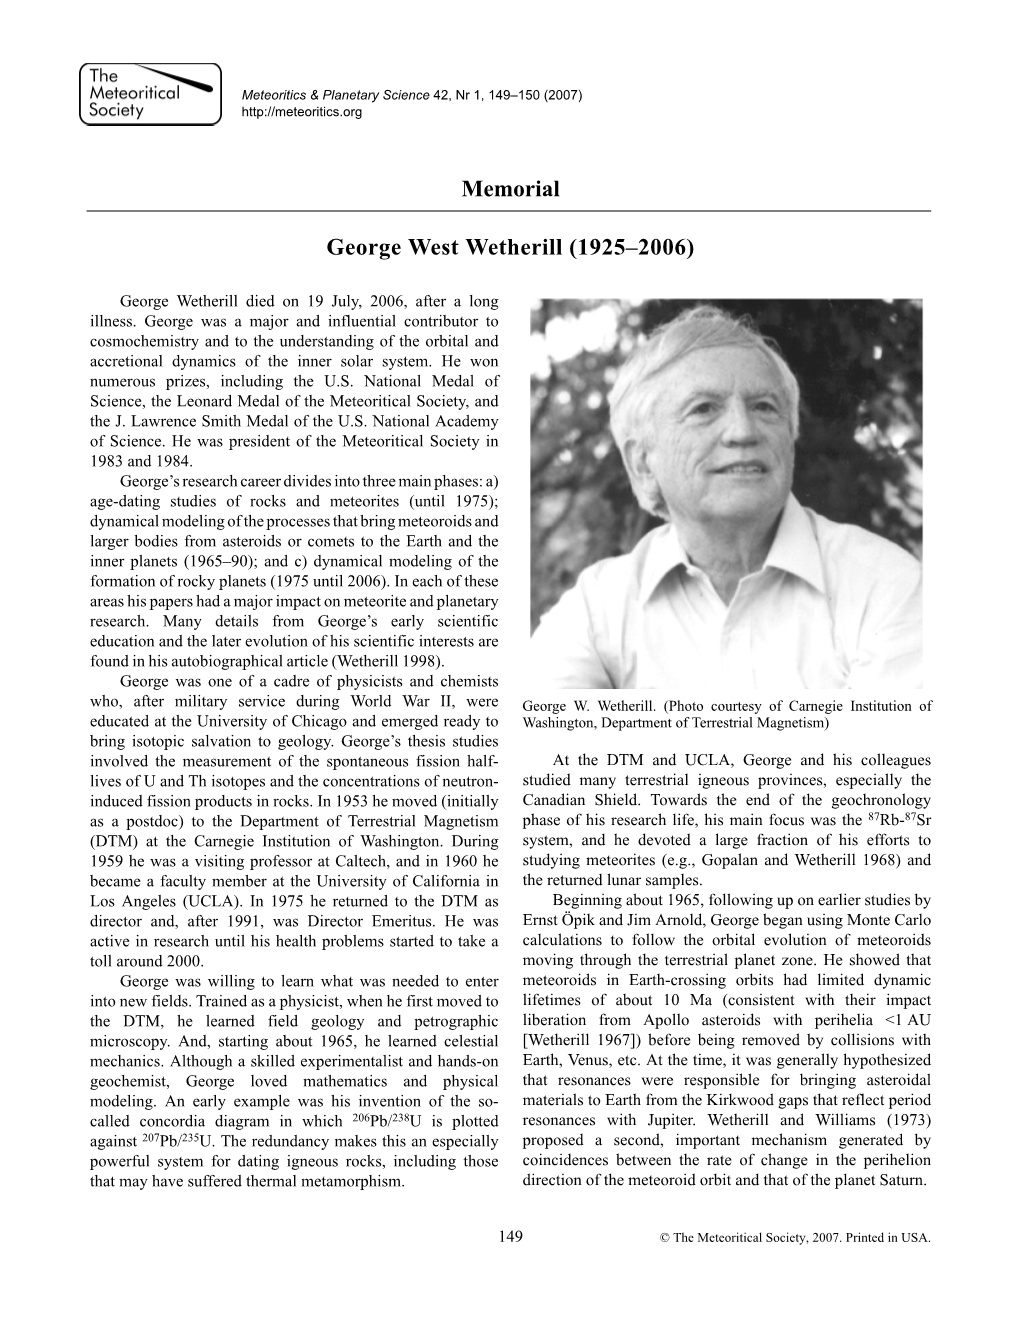 Memorial George West Wetherill (1925–2006)